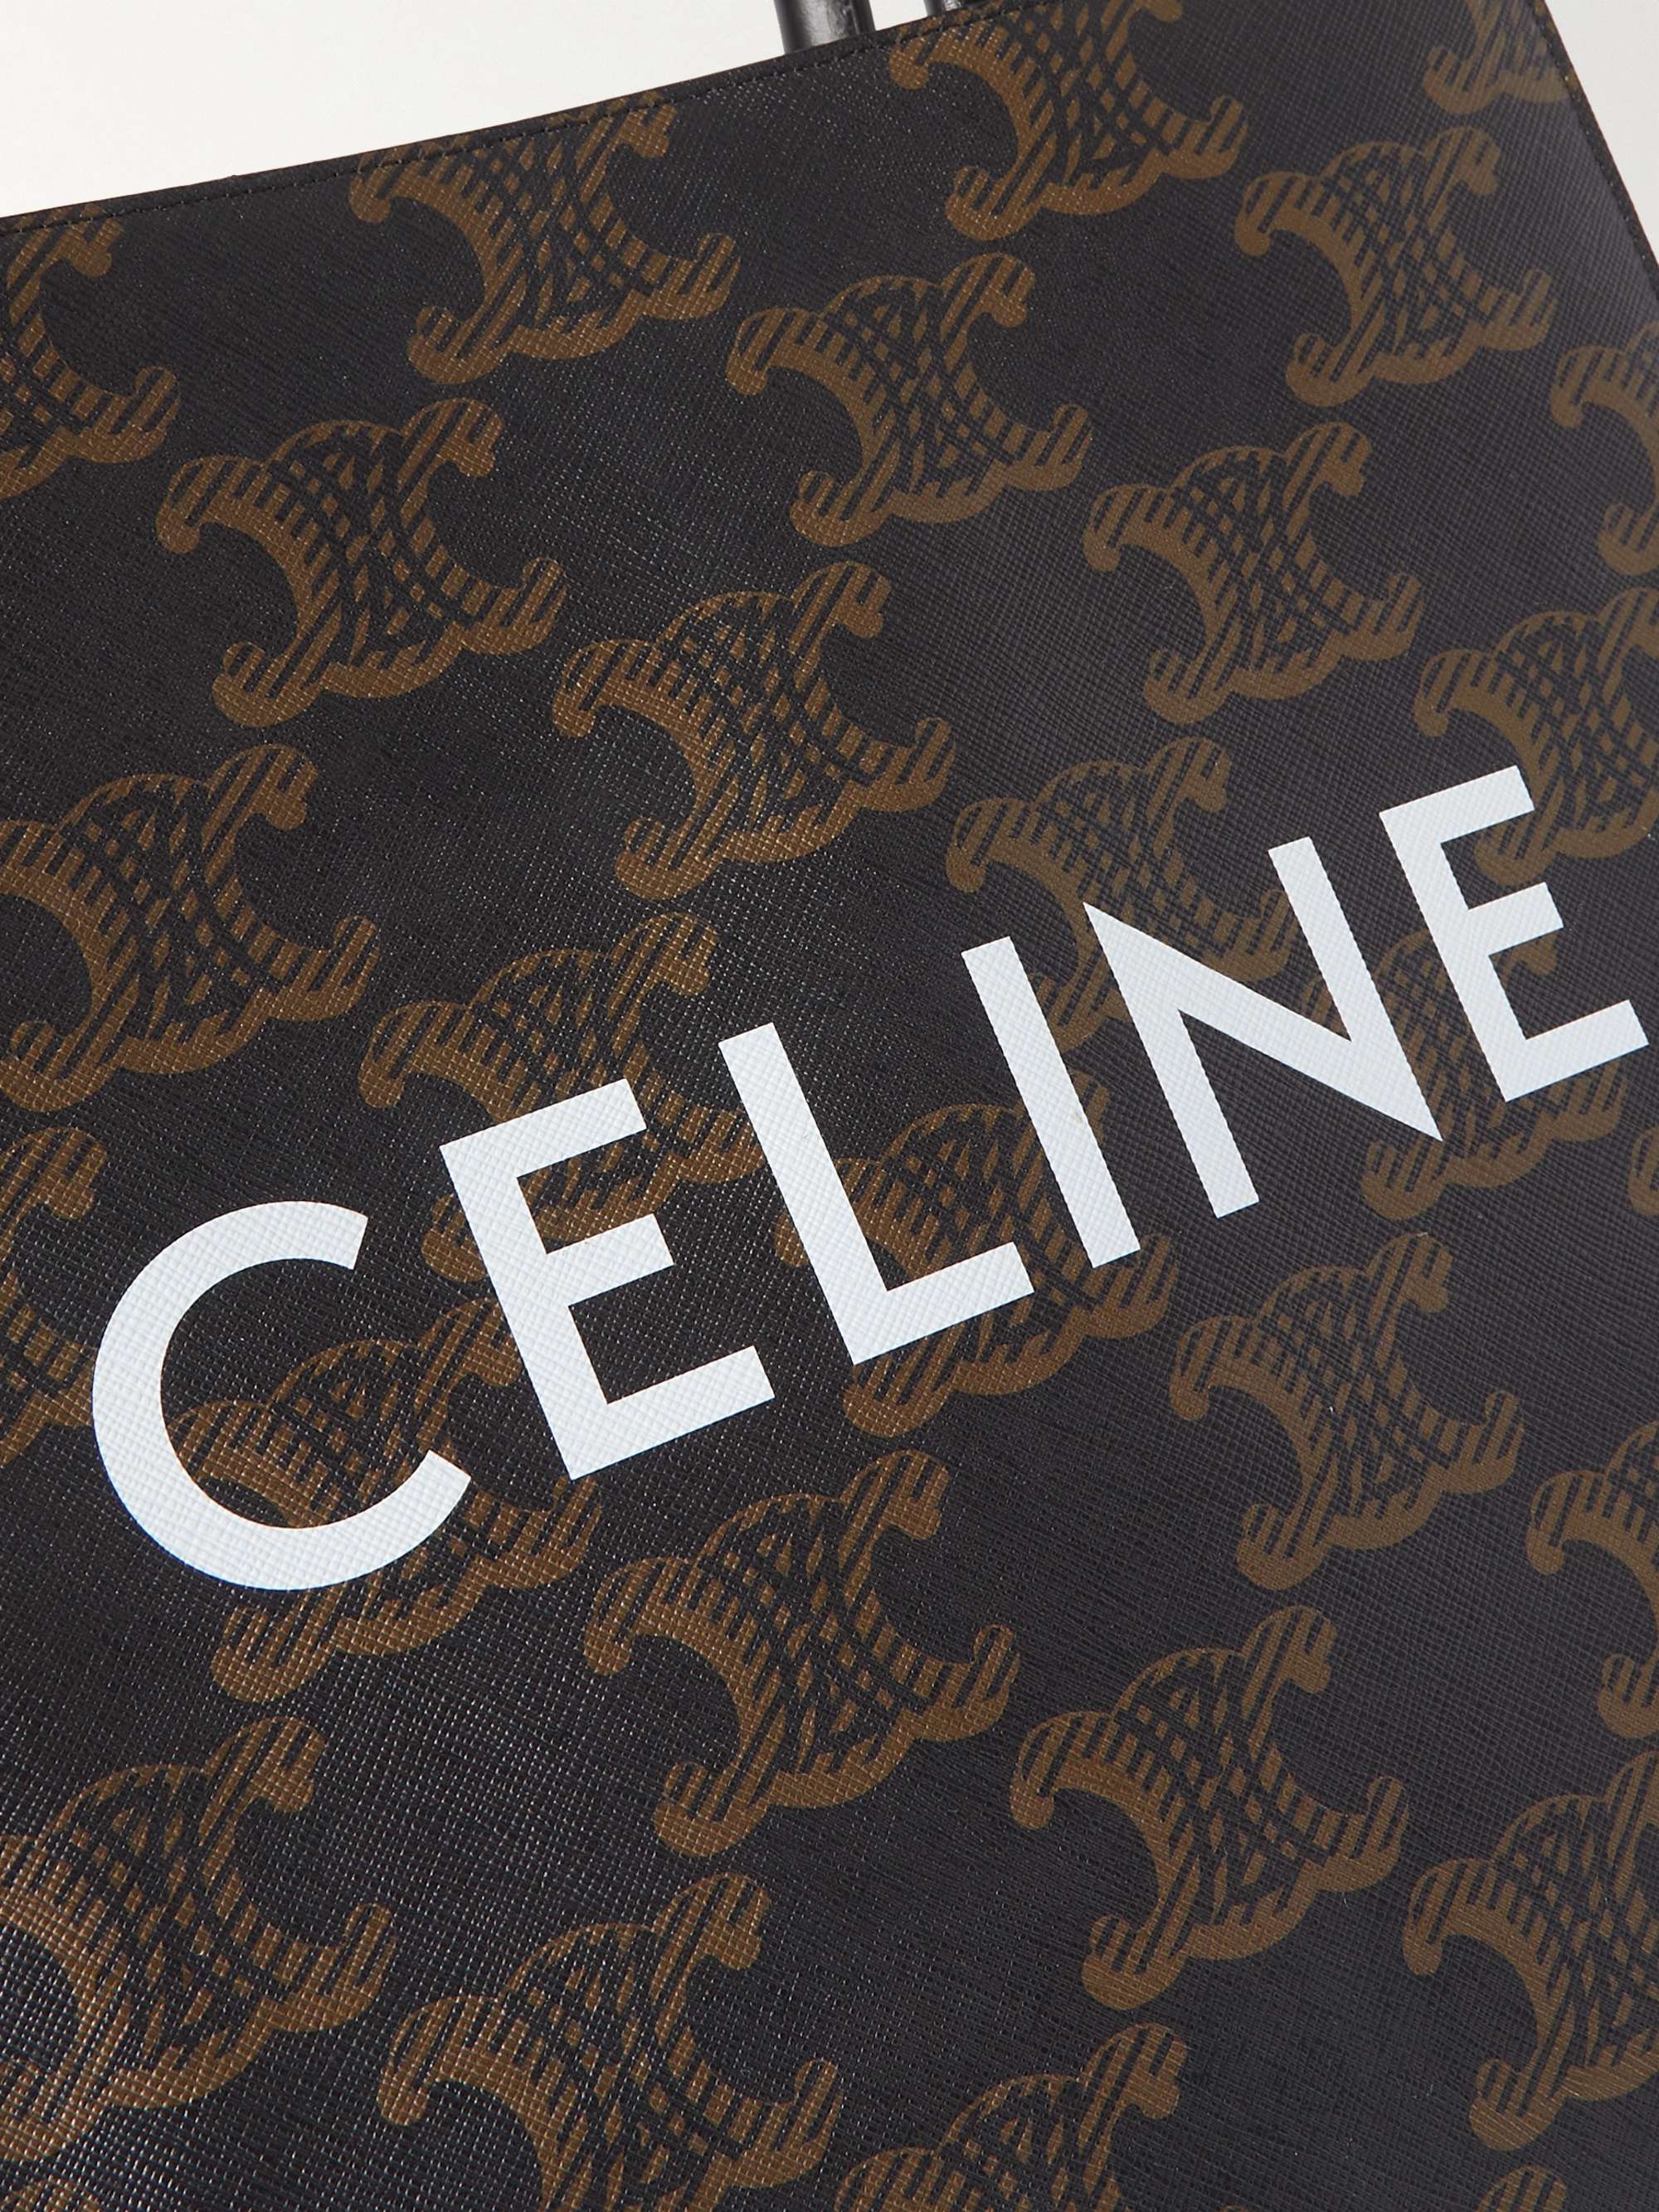 CELINE HOMME Cabas Triomphe Leather-Trimmed Logo-Print Coated-Canvas Tote Bag